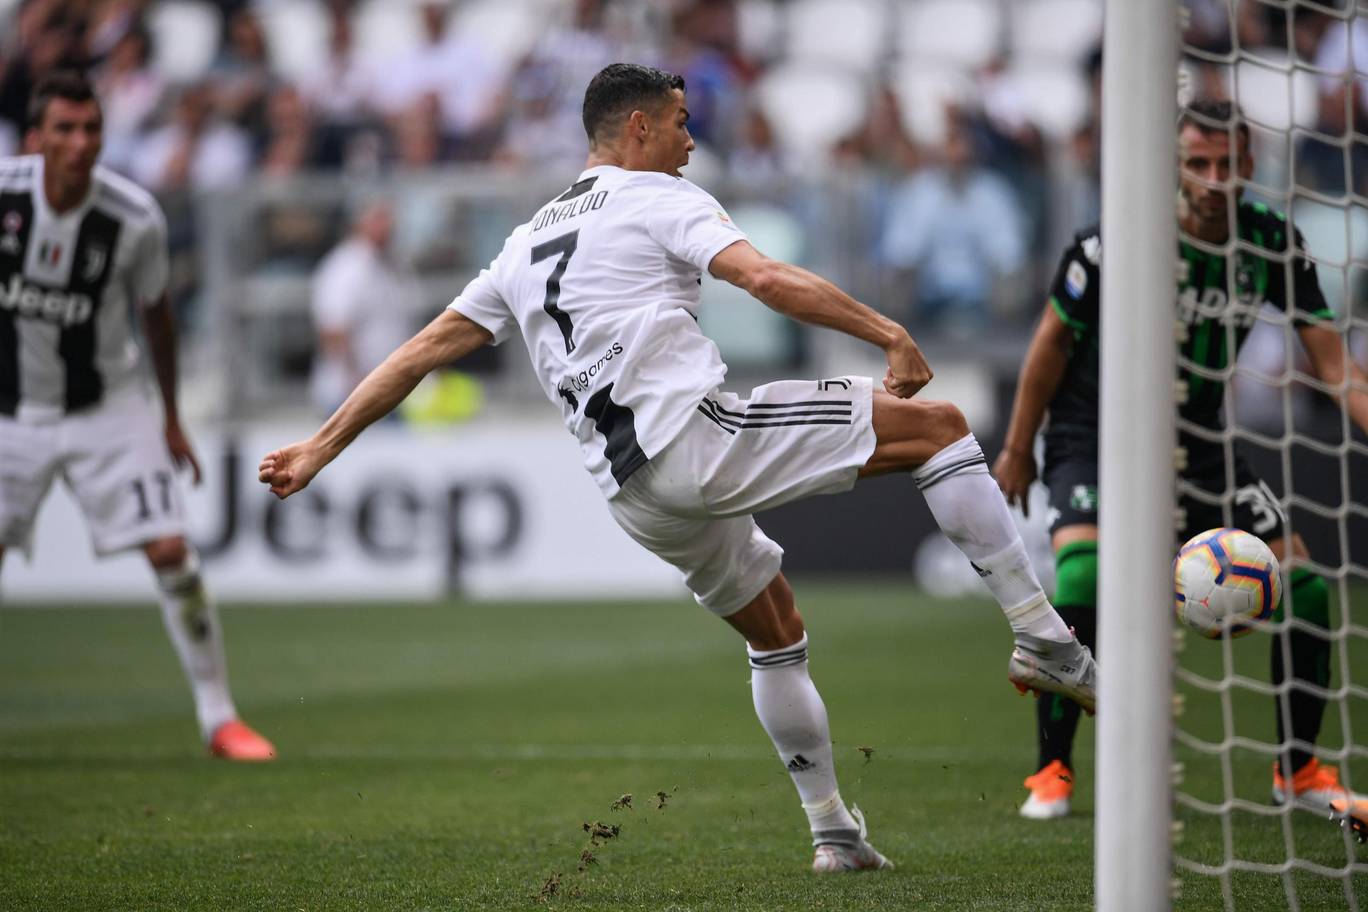 cristiano ronaldo juventus 160918b Cristiano Ronaldo finally opens his goals tally for Juventus with a brace against Sassuolo